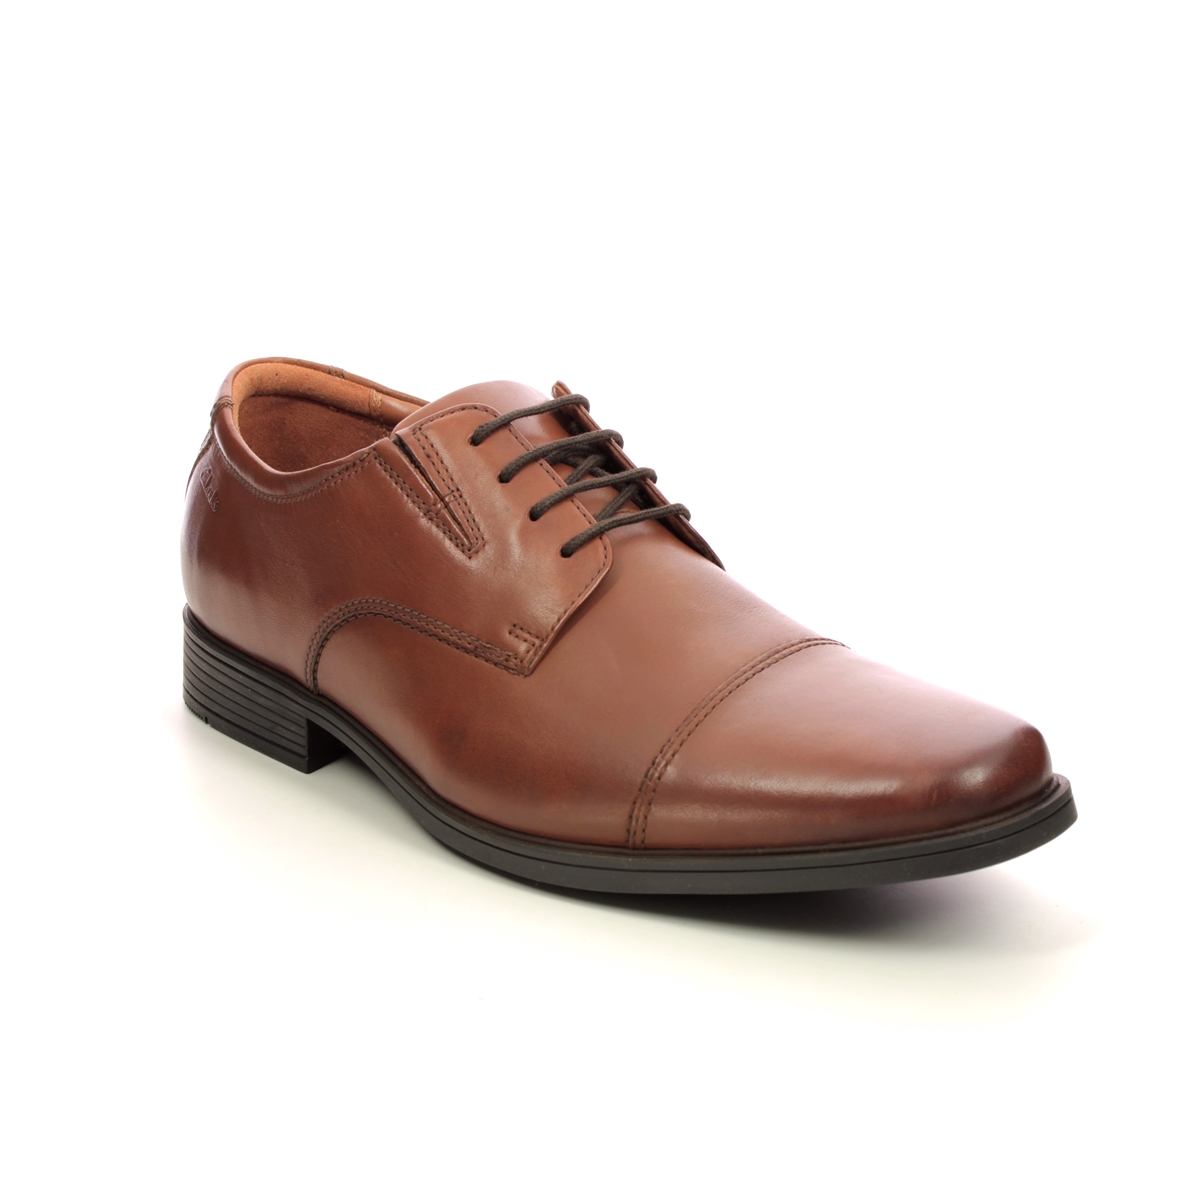 Clarks Tilden Cap Dark Tan Mens Formal Shoes 300968H In Size 10 In Plain Dark Tan H Width Fitting Extra Wide